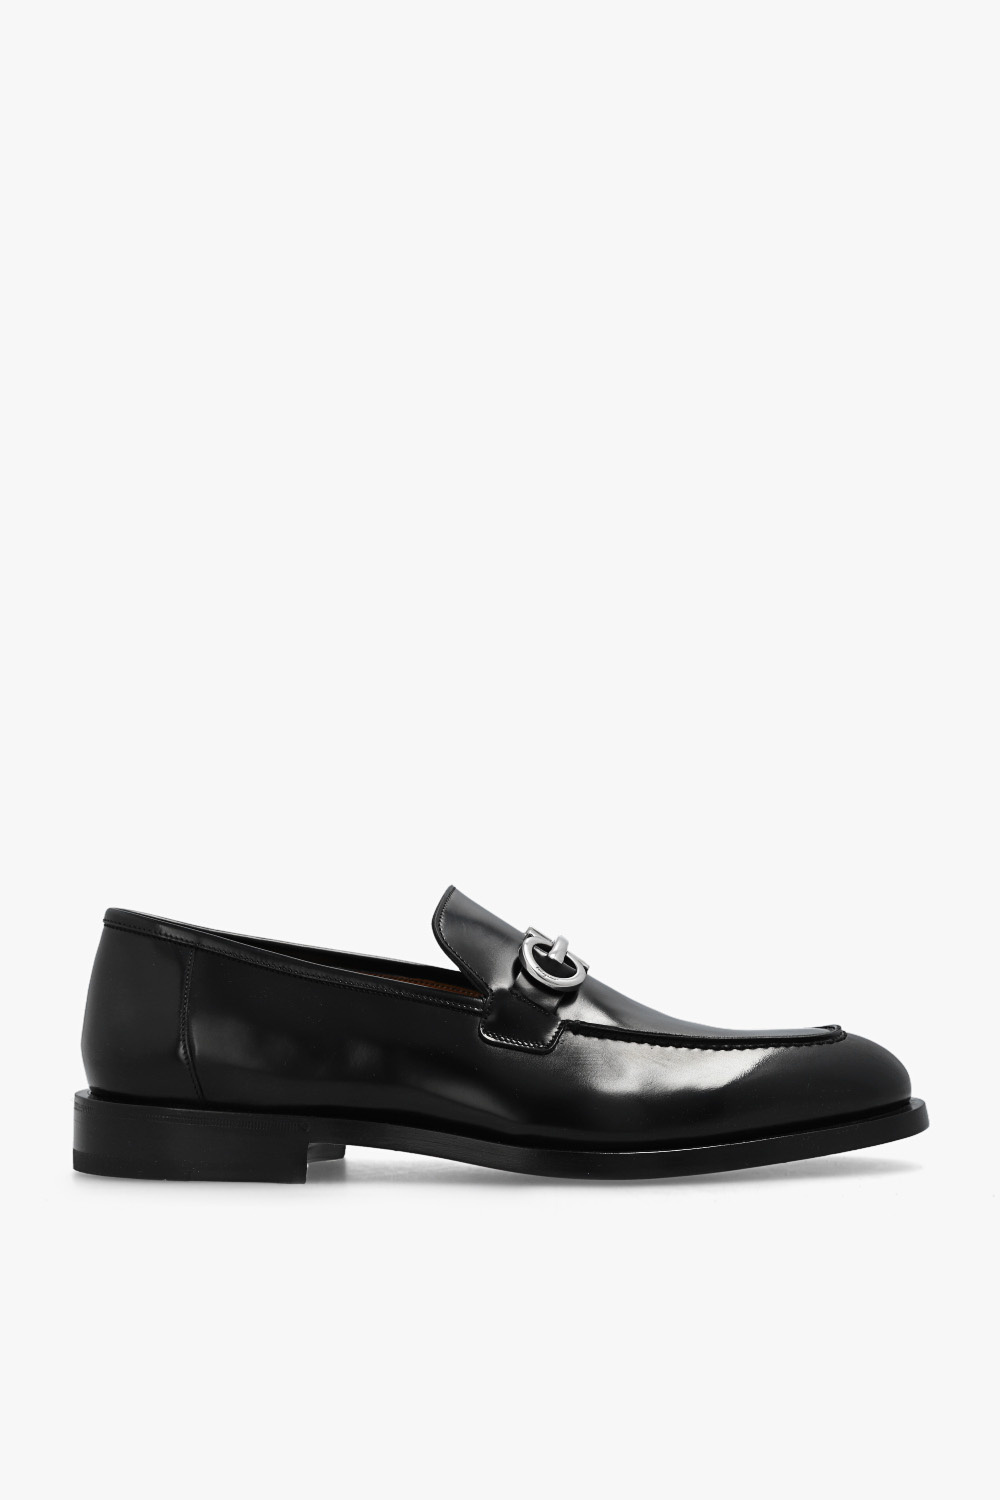 Salvatore Ferragamo Black Suede Leather Loafer Shoes Size 9